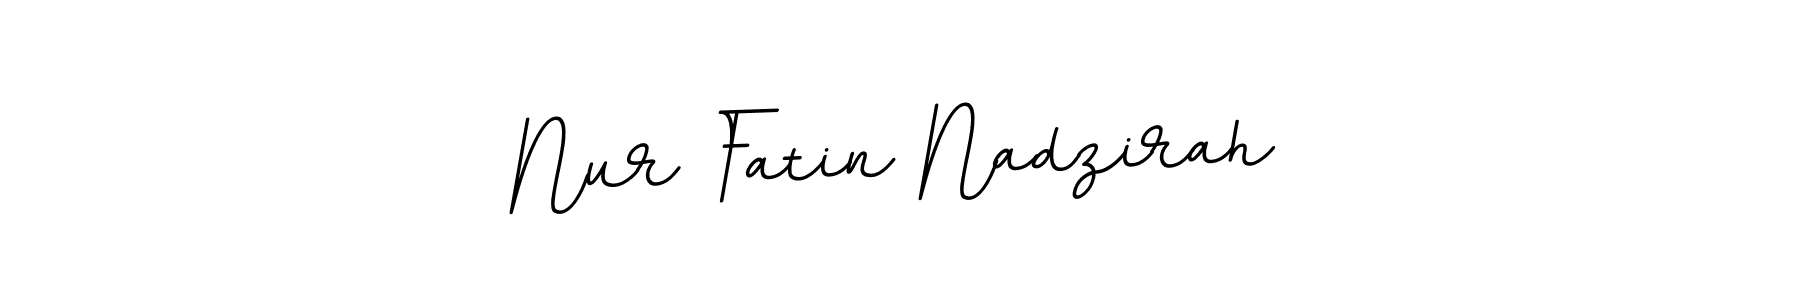 How to Draw Nur Fatin Nadzirah signature style? BallpointsItalic-DORy9 is a latest design signature styles for name Nur Fatin Nadzirah. Nur Fatin Nadzirah signature style 11 images and pictures png